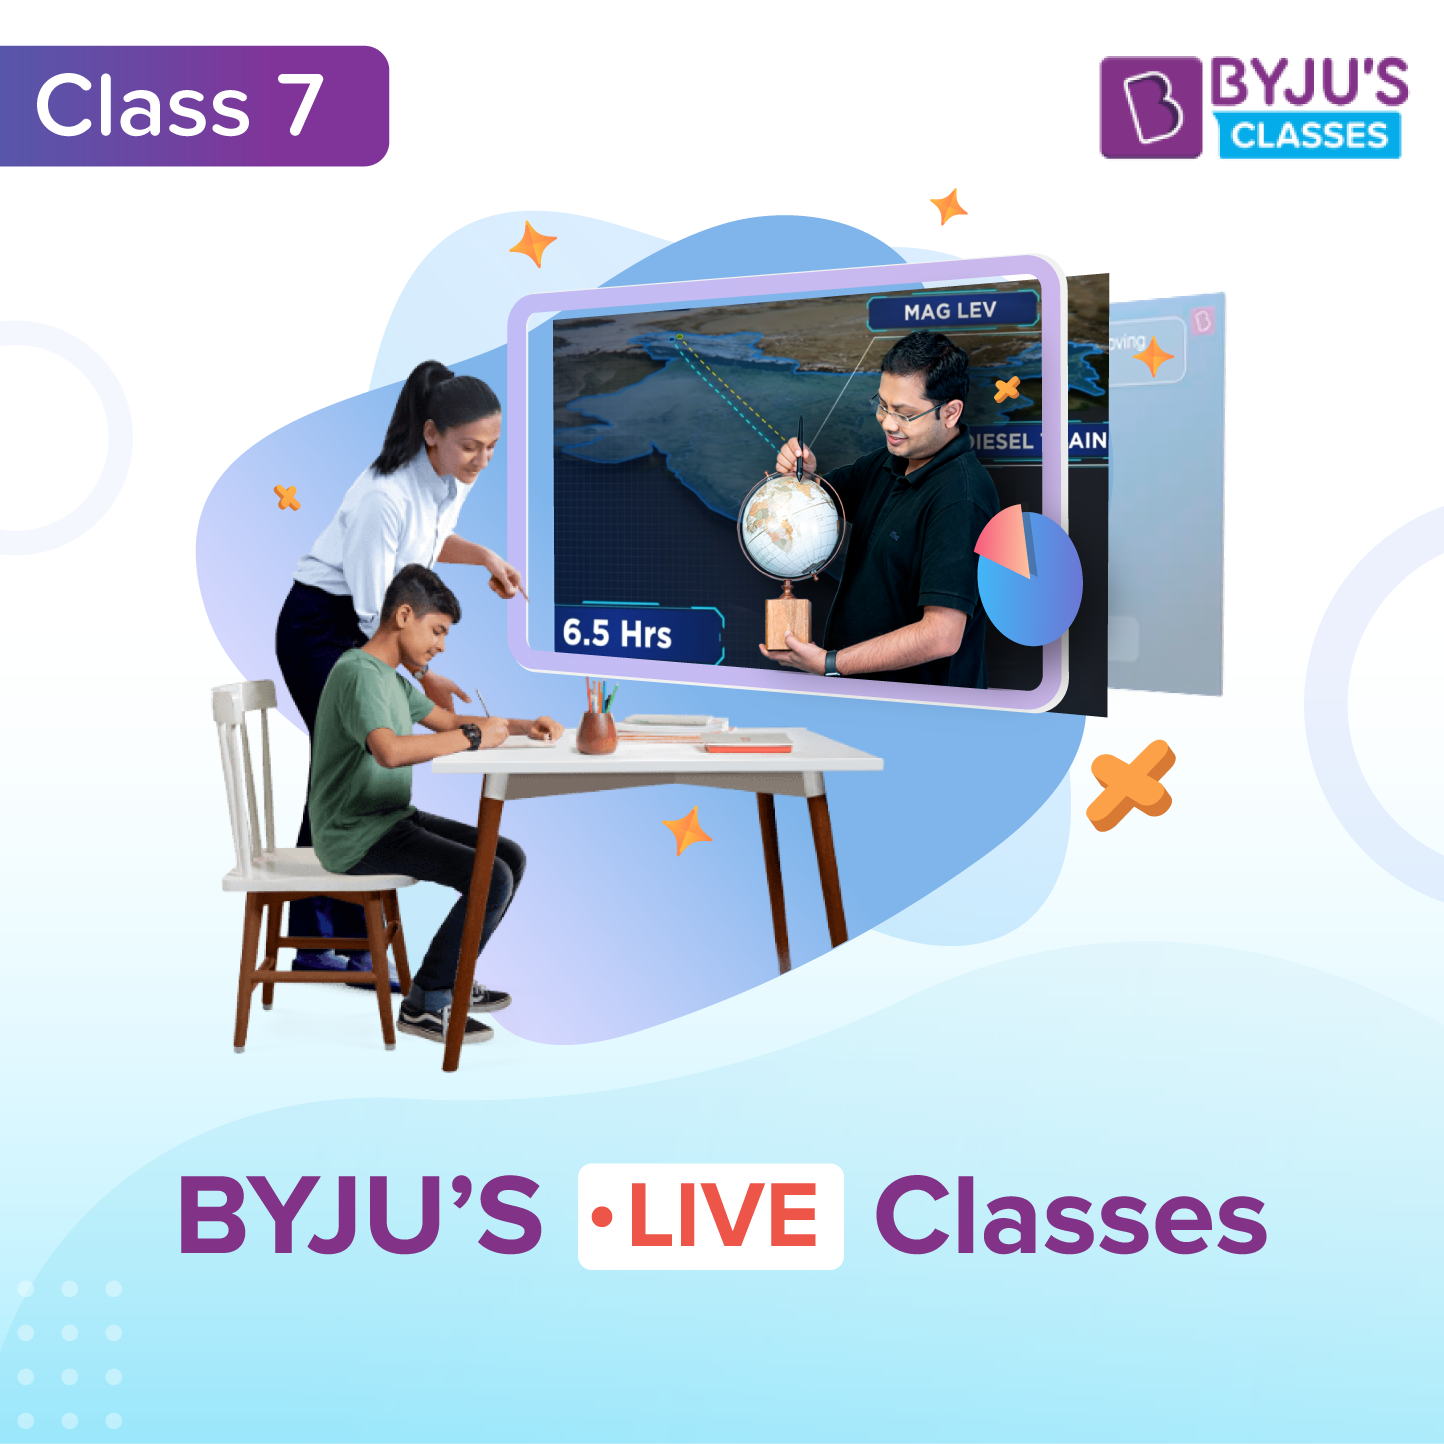 BYJU'S Live Classes - Class 7